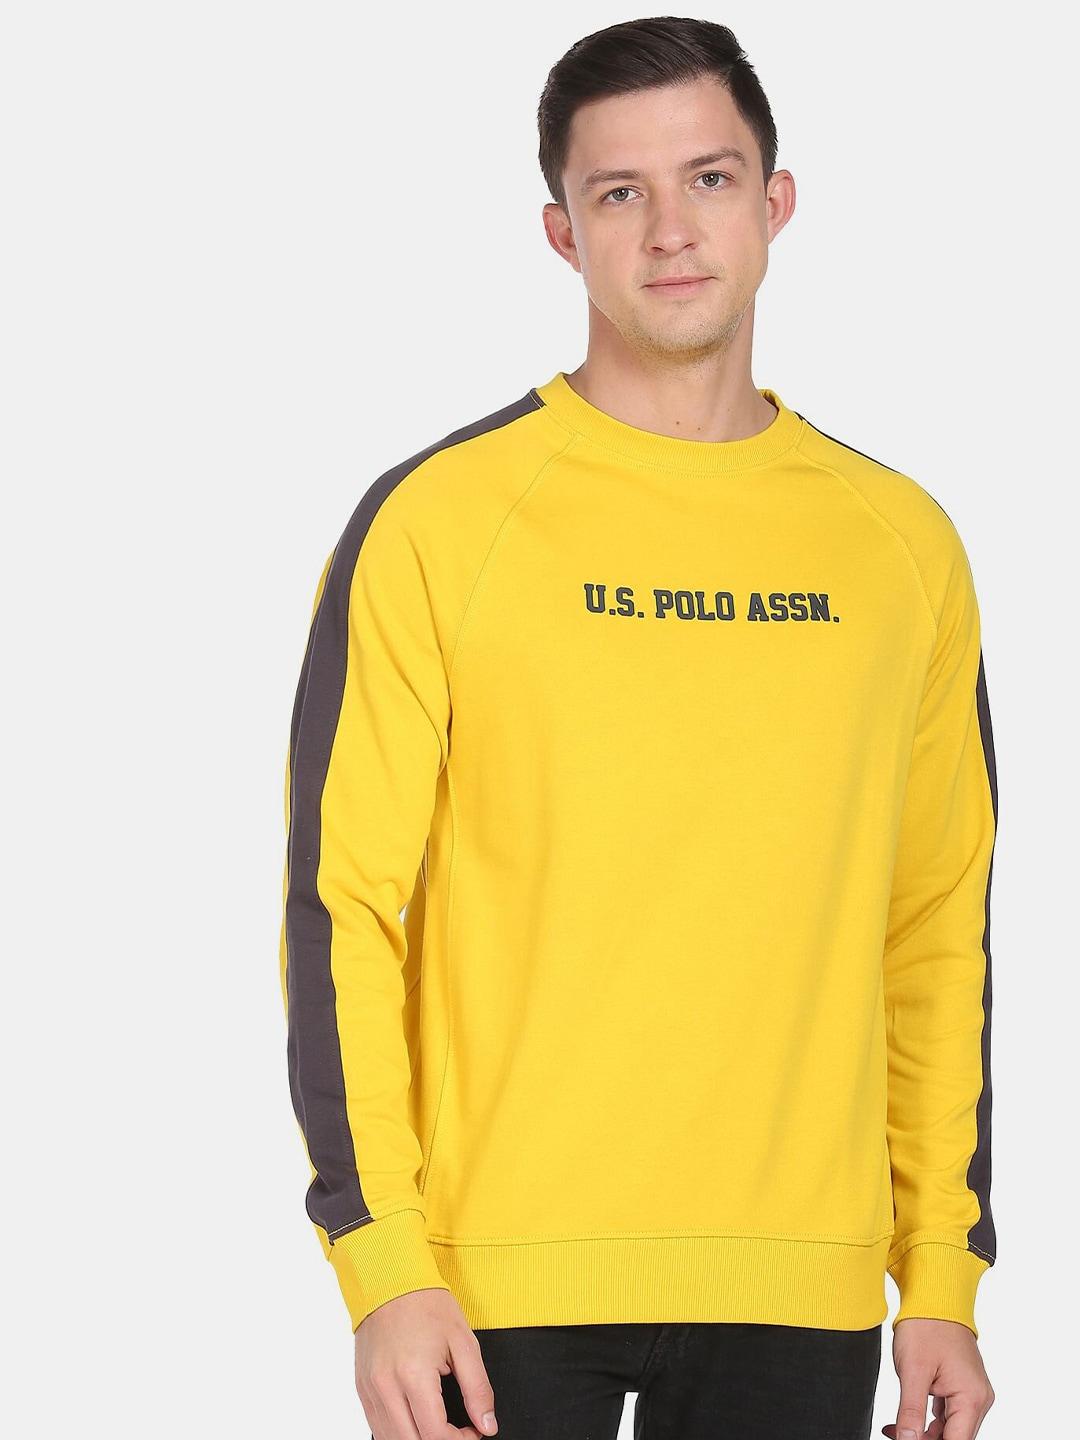 u-s-polo-assn-denim-co-men-yellow-printed-sweatshirt